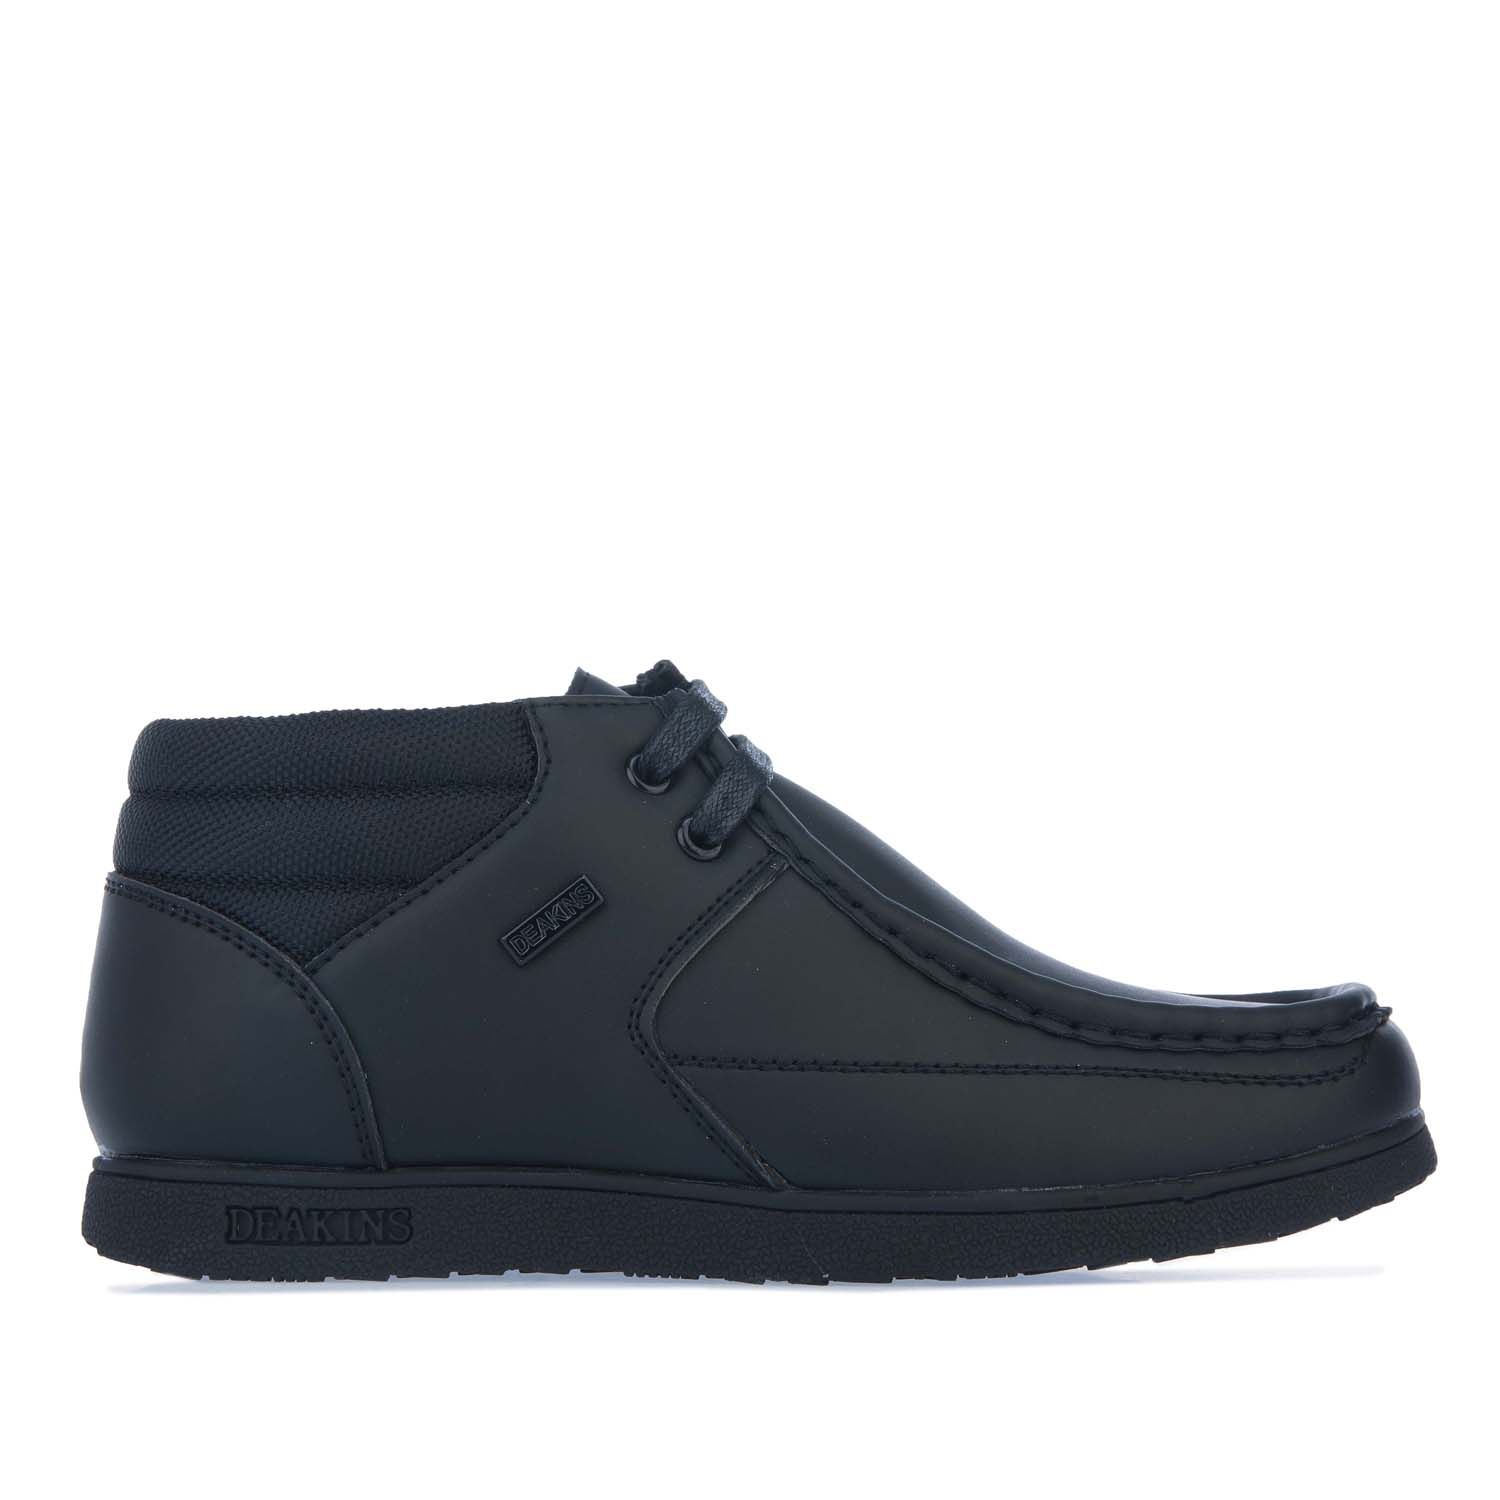 Children Boys Deakins Grafton Strap Shoe In Black RRP £45.00 SR 